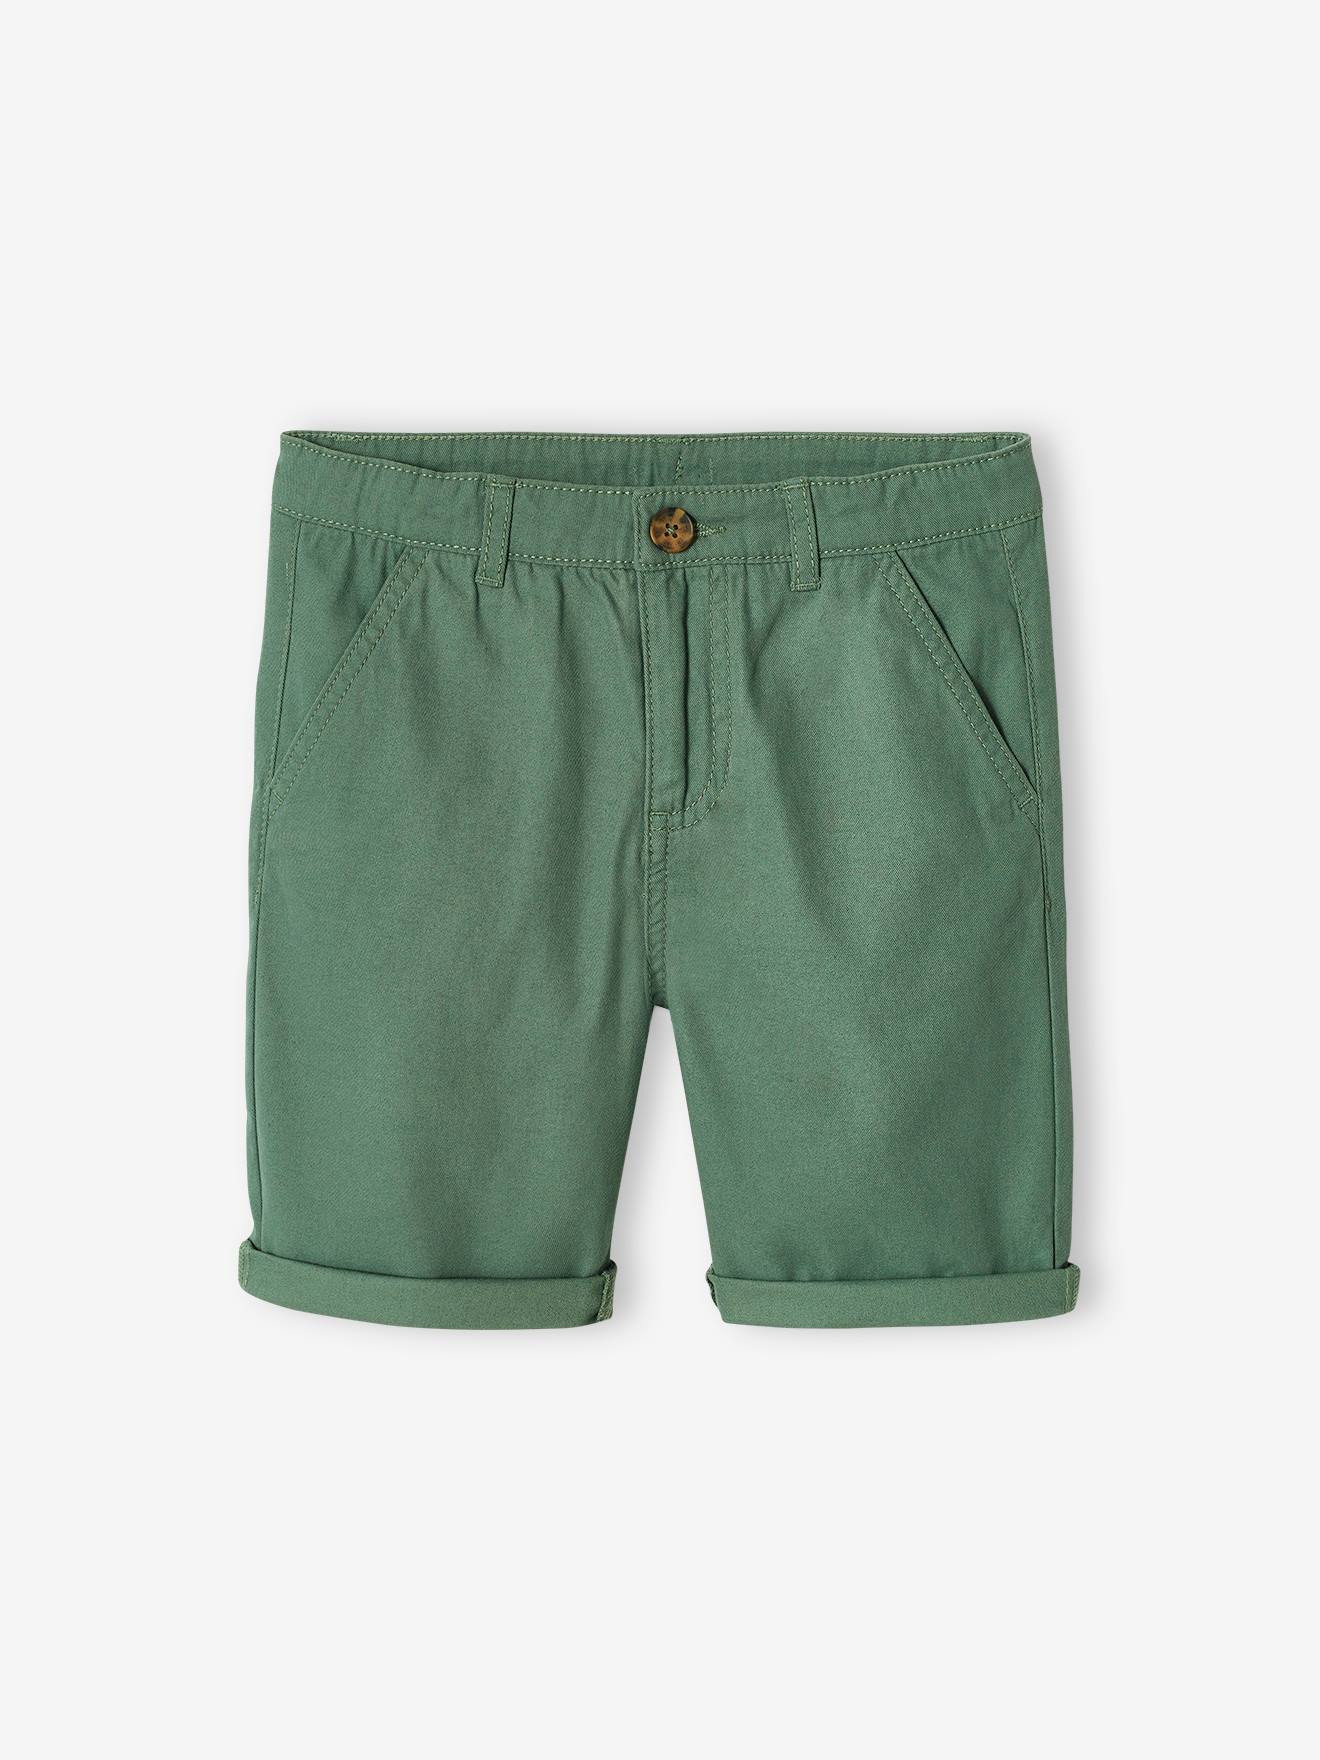 Chino Bermuda Shorts for Boys green